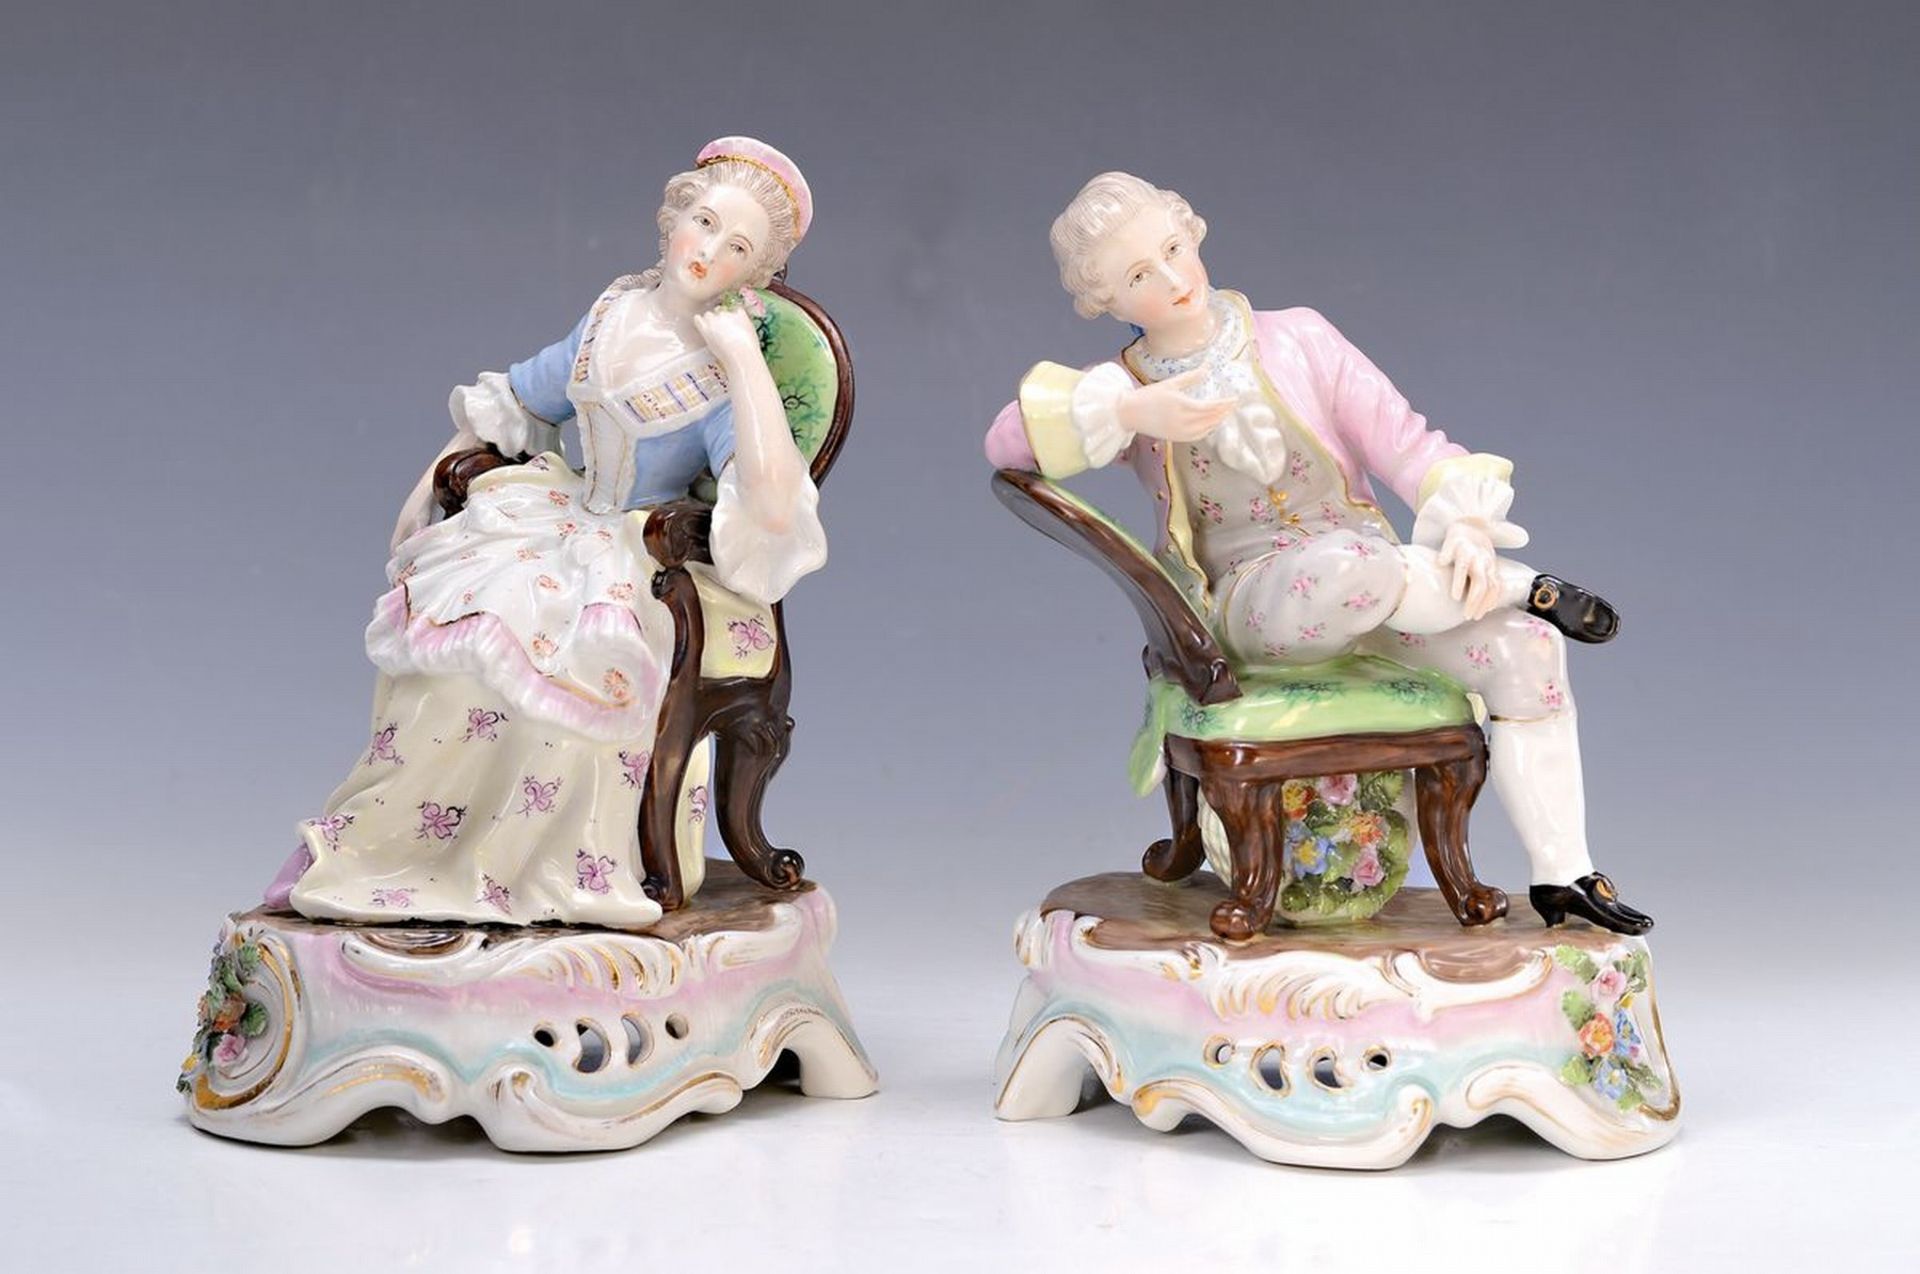 Porzellanfigurenpaar, deutsch, um 1890, galantes Paar auf